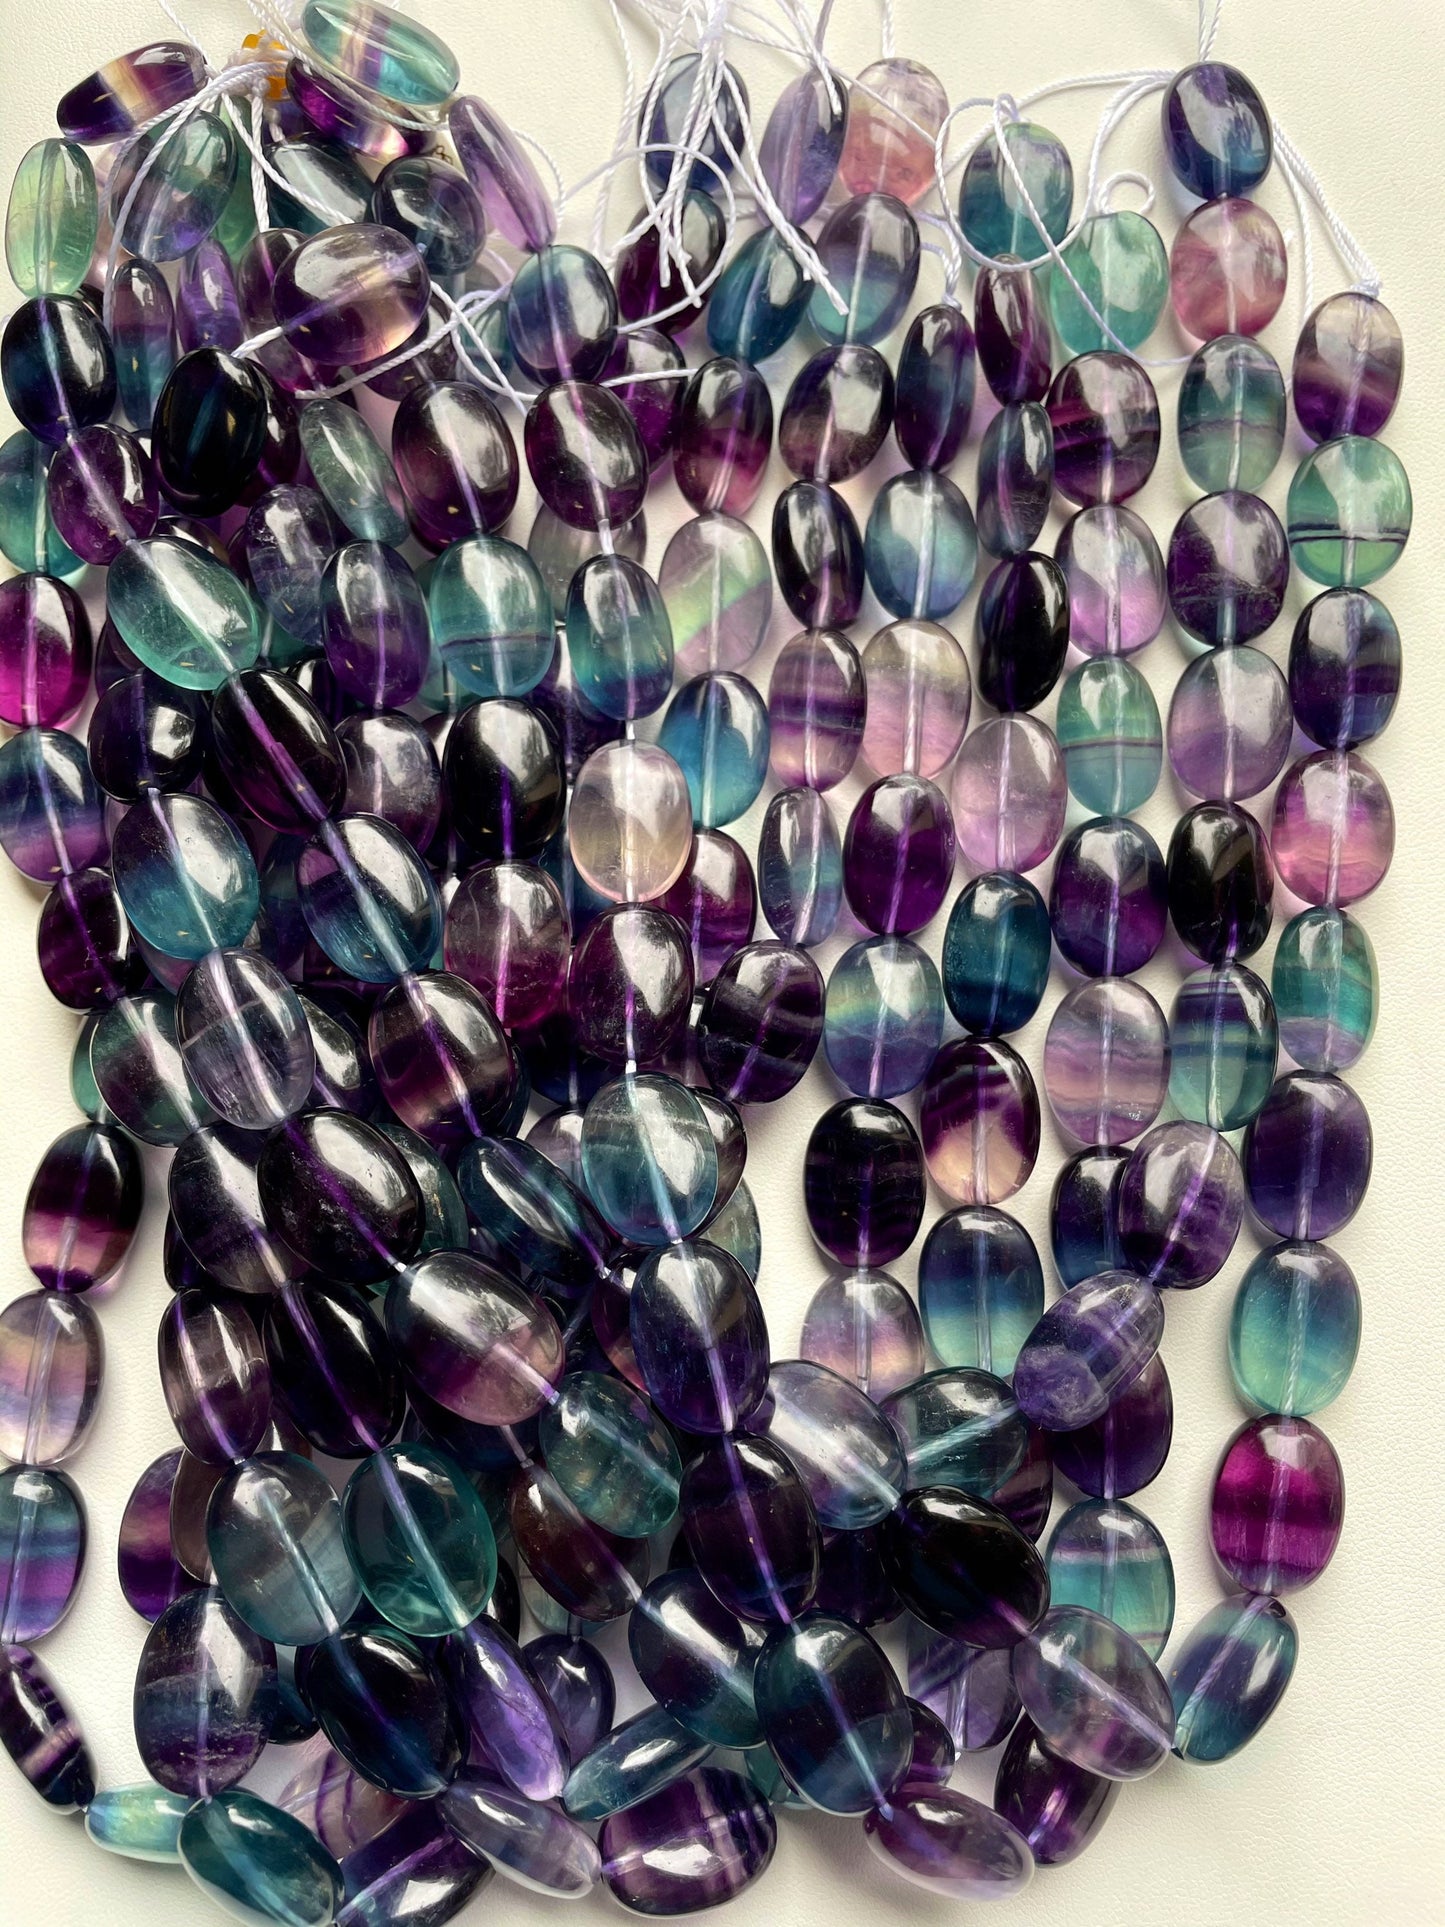 AAA Natural Fluorite Gemstone Bead 13x18mm Oval Shape, Beautiful Natural Purple Green Color Fluorite Gemstone Bead, Great Quality 15.5"